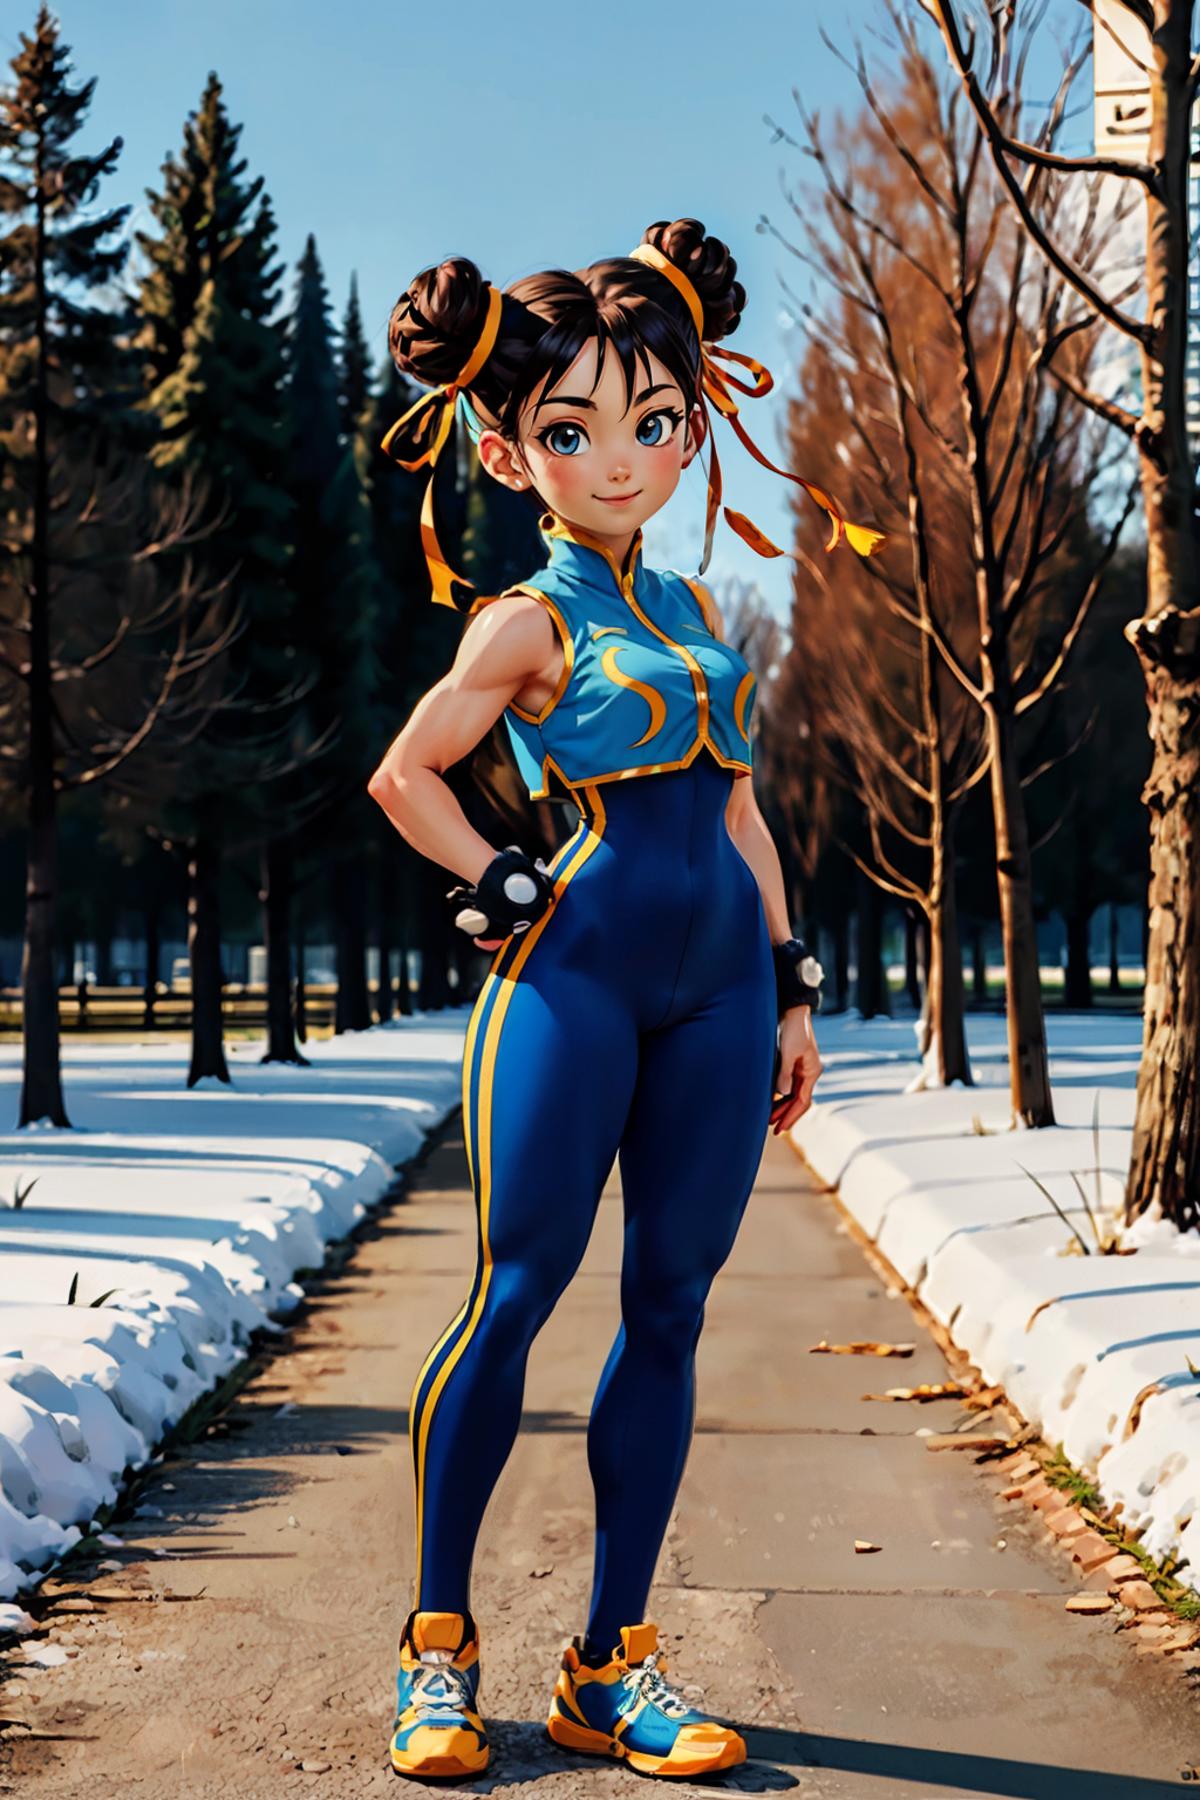 Chun-Li - Street Fighter (separate costumes) image by wikkitikki